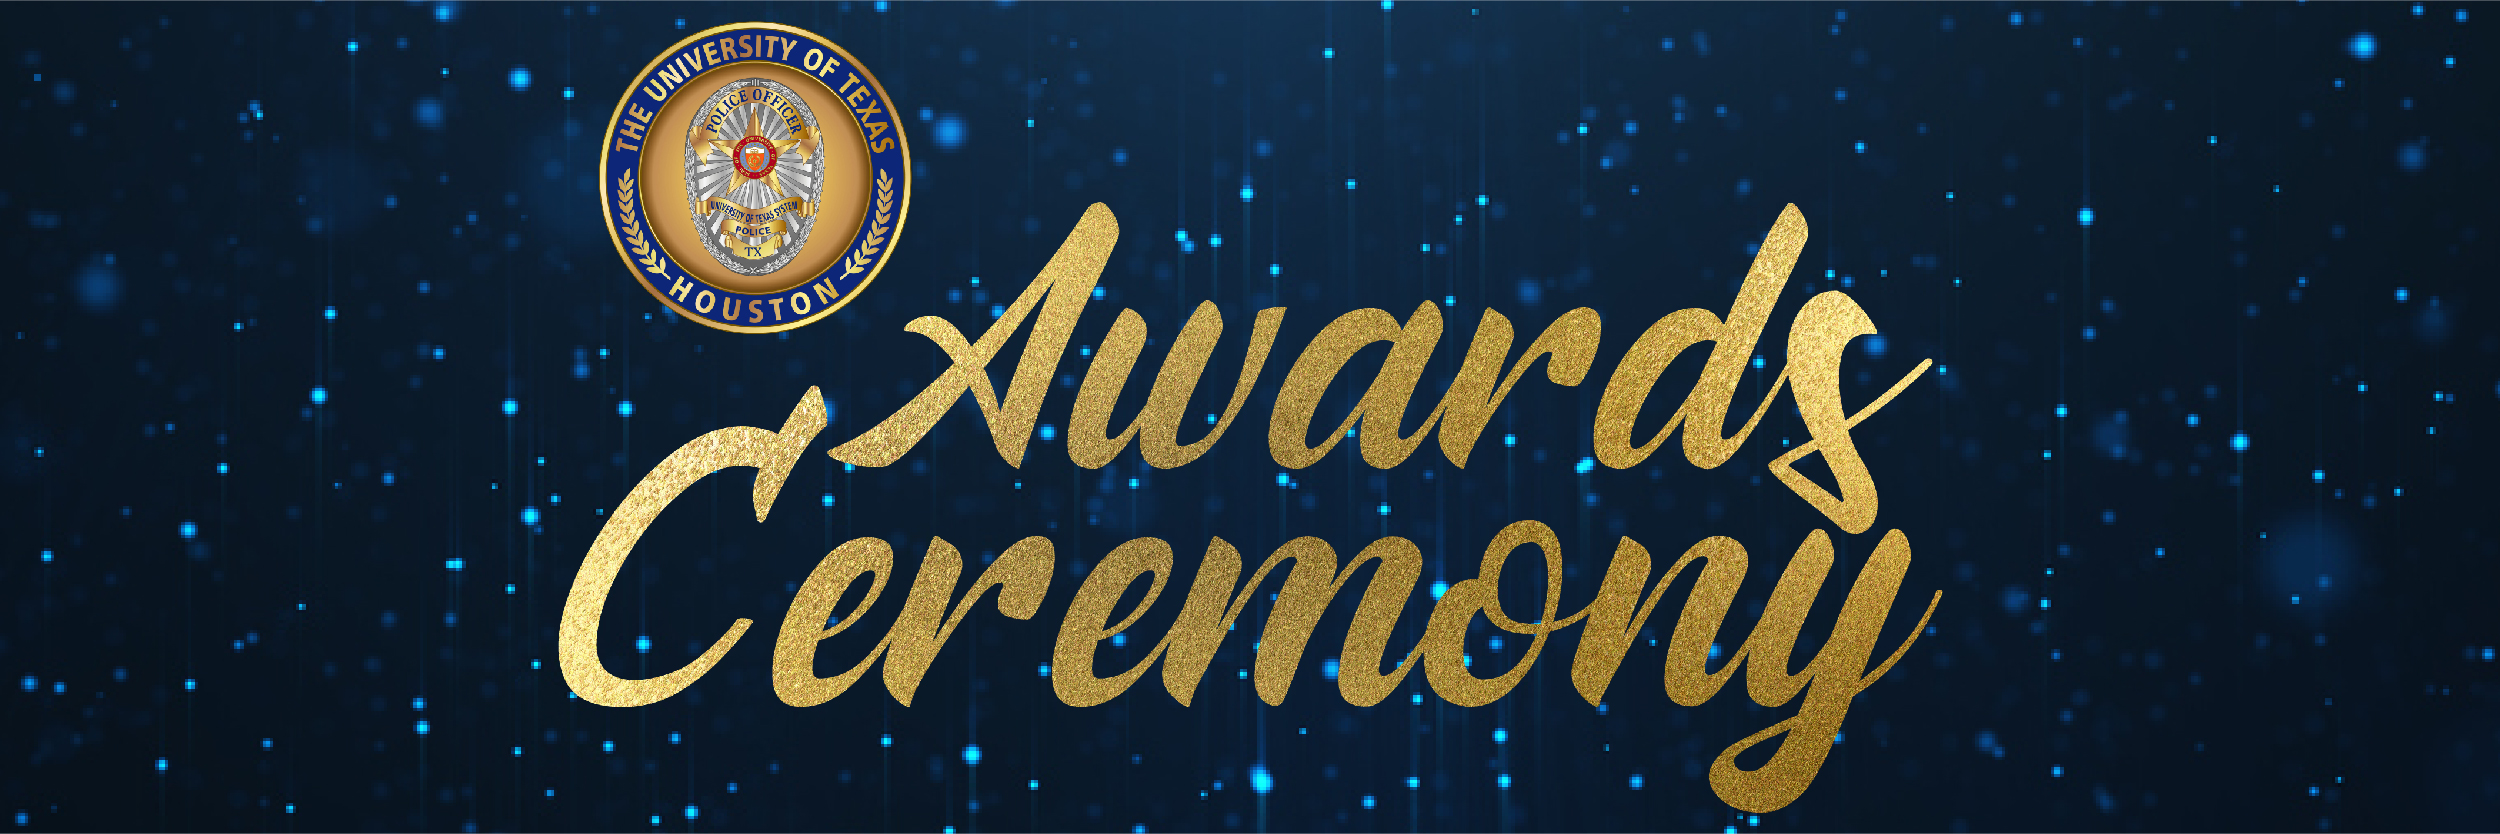 UT Police Awards Ceremony in gold glitter text